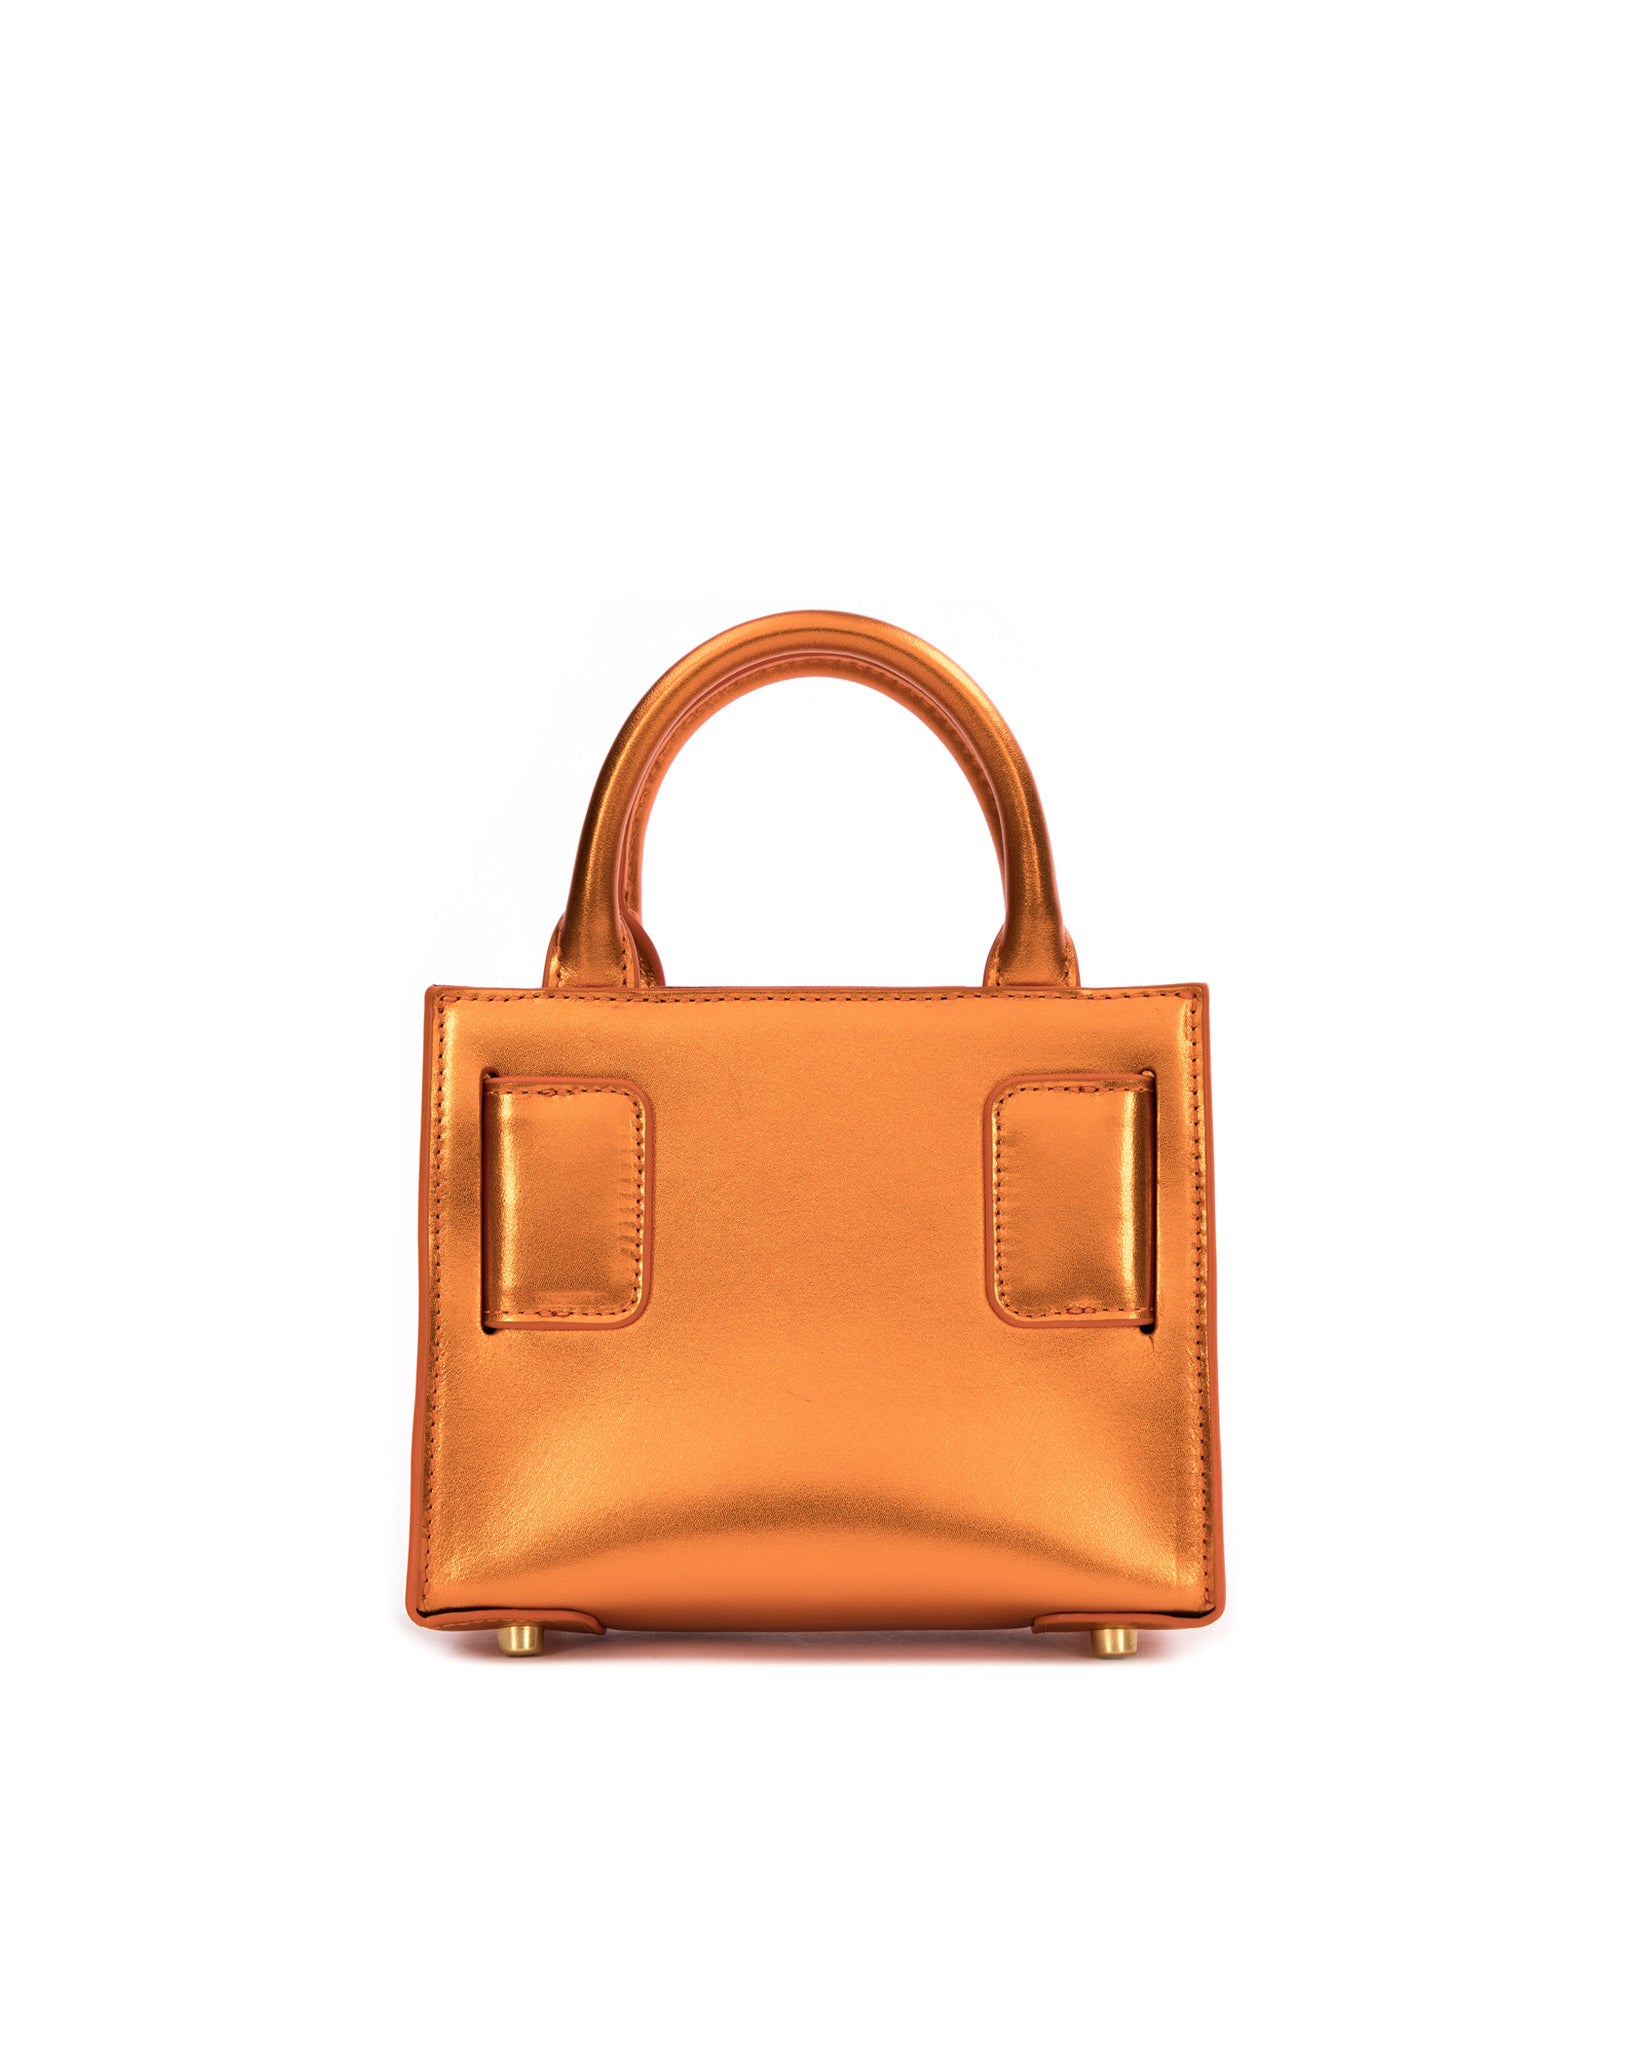 Brandon Blackwood New York - Kuei Bag - Metallic Orange Leather